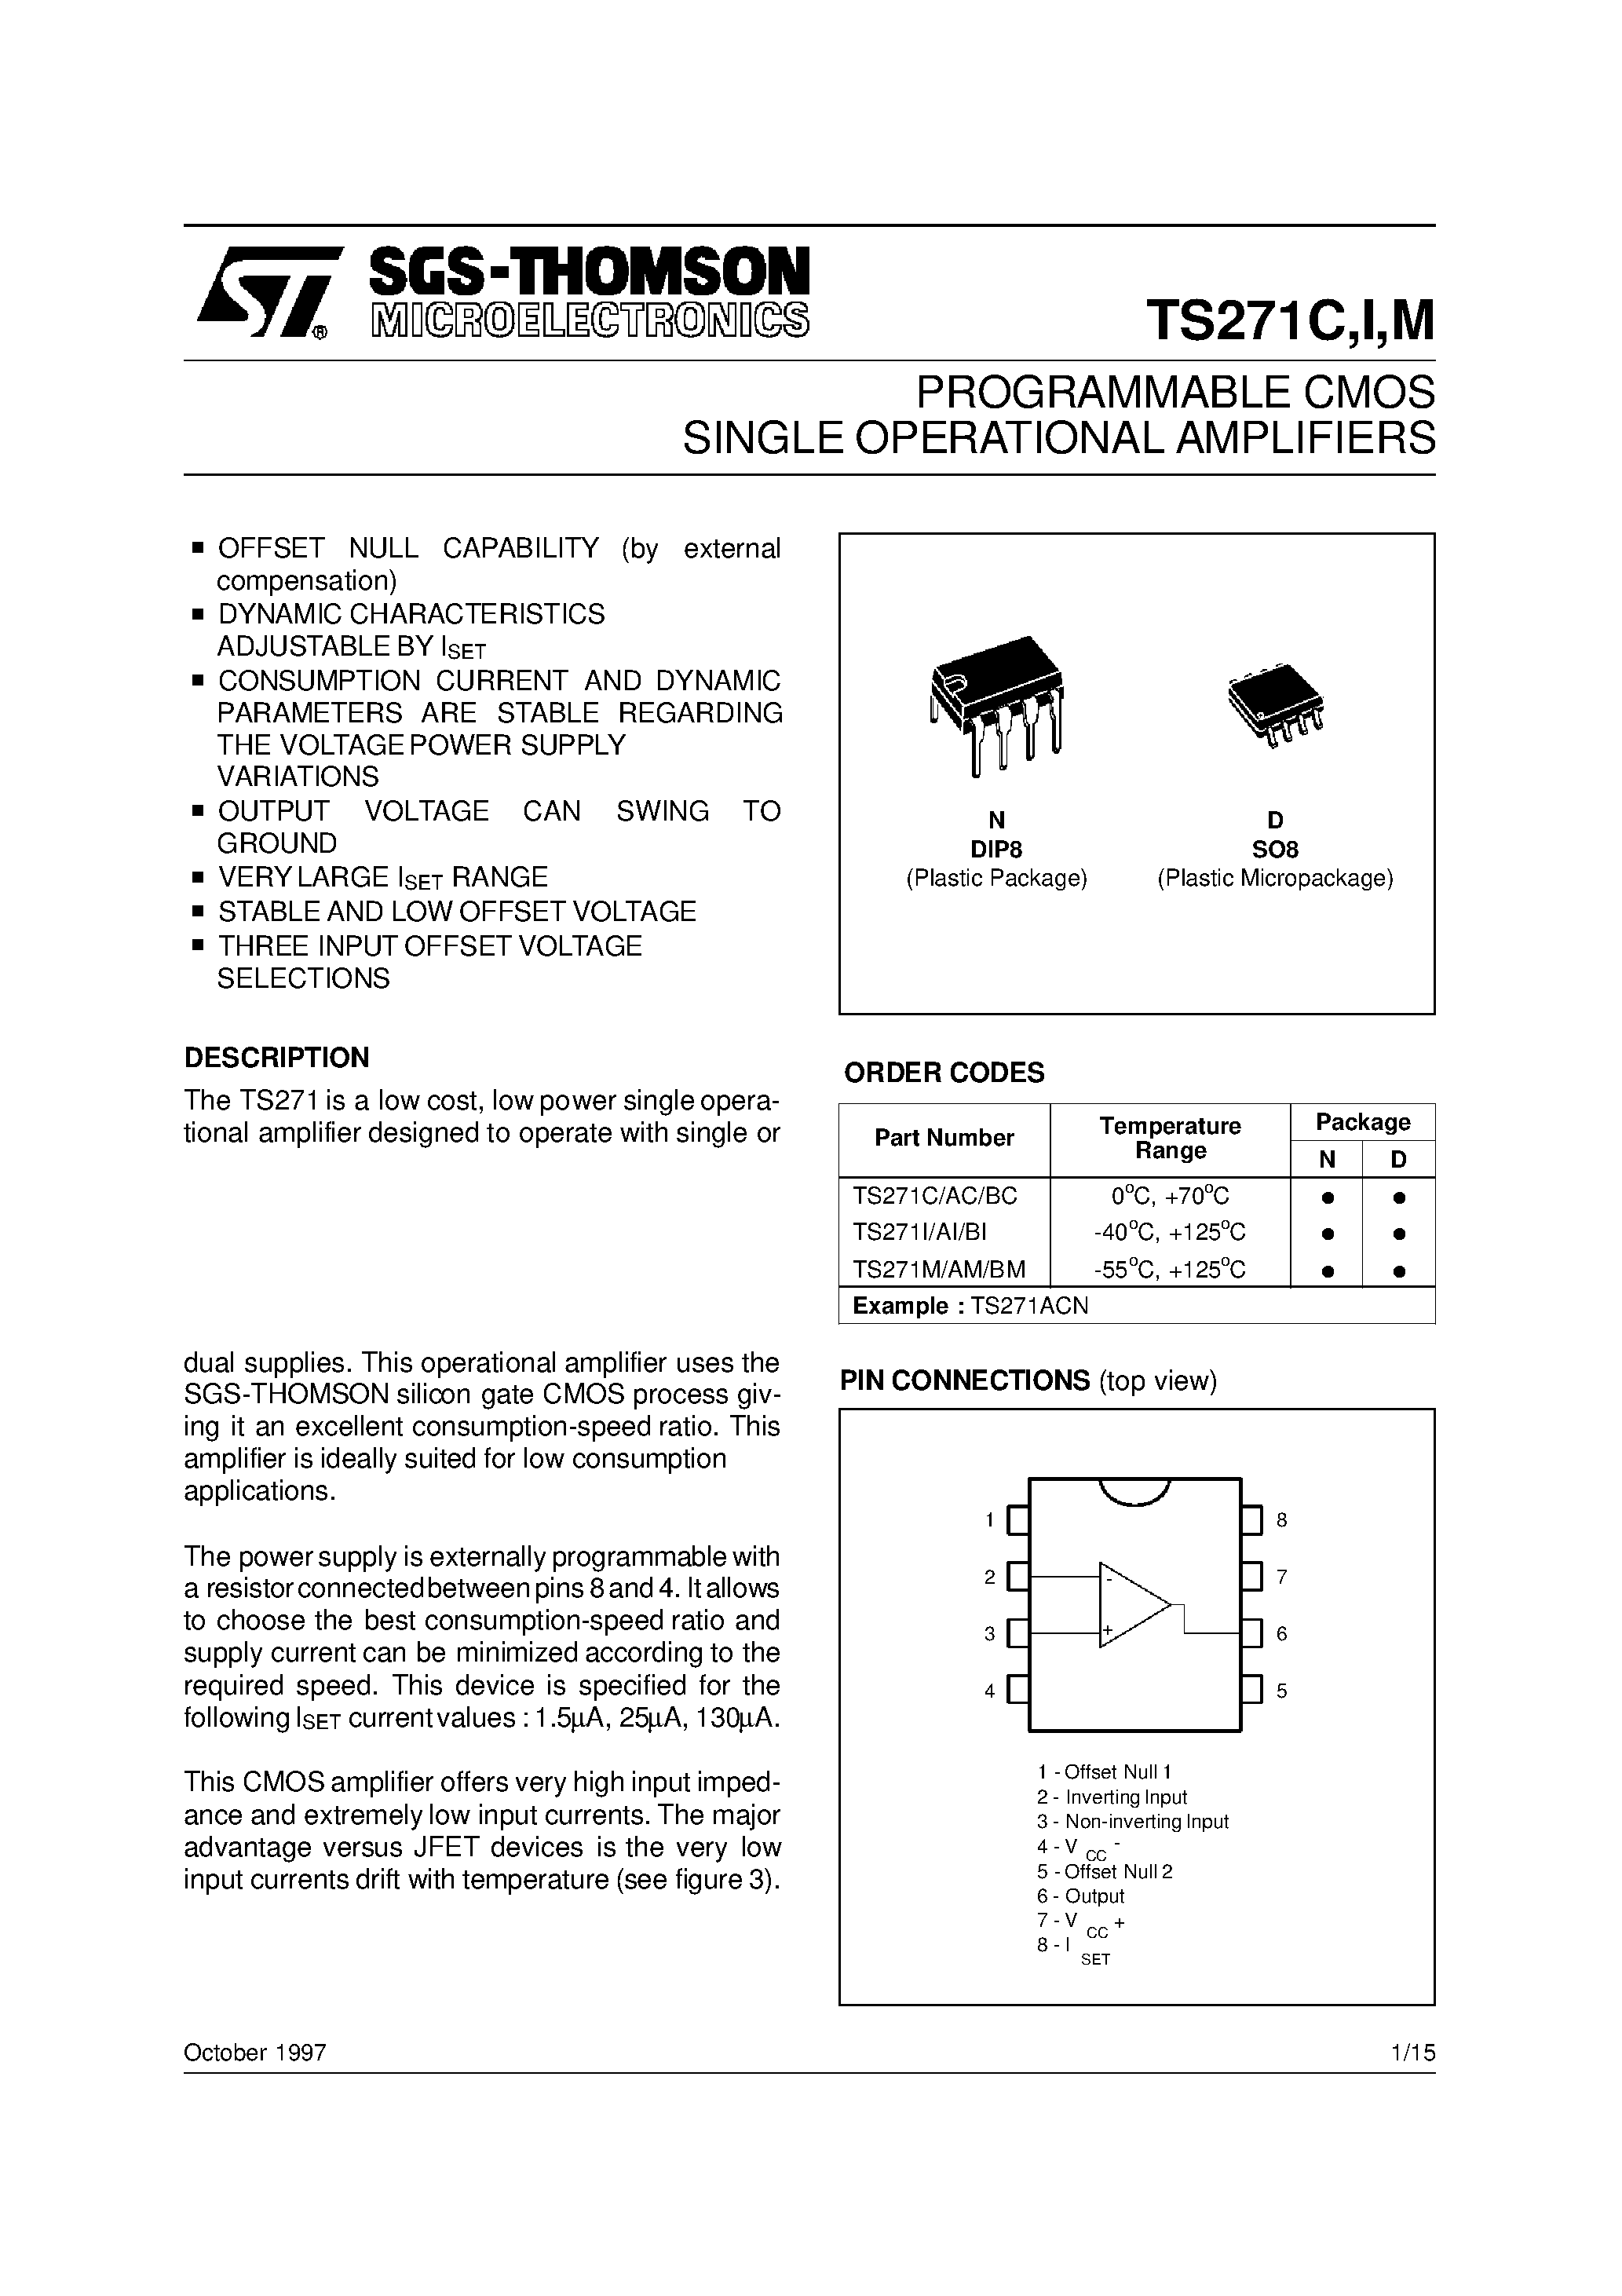 Даташит TS271BM - PROGRAMMABLE CMOS SINGLE OPERATIONAL AMPLIFIERS страница 1